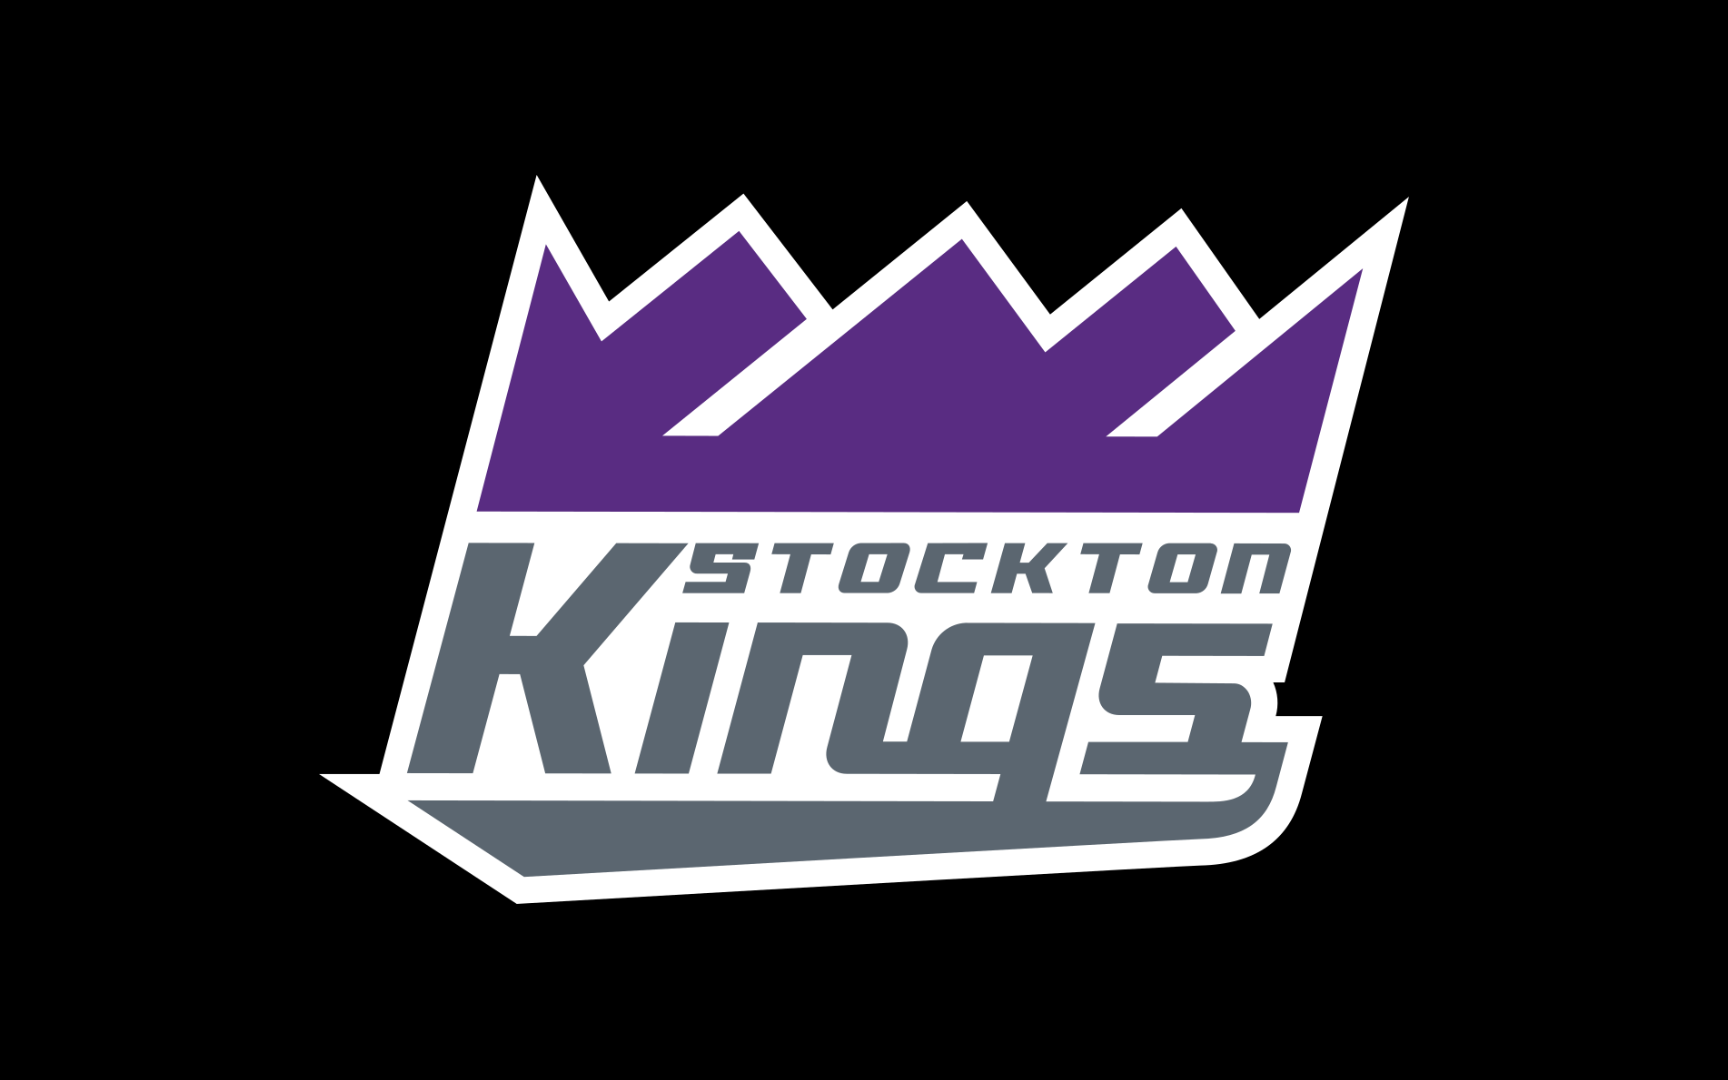 Stockton Kings vs Rio Grande Valley Vipers